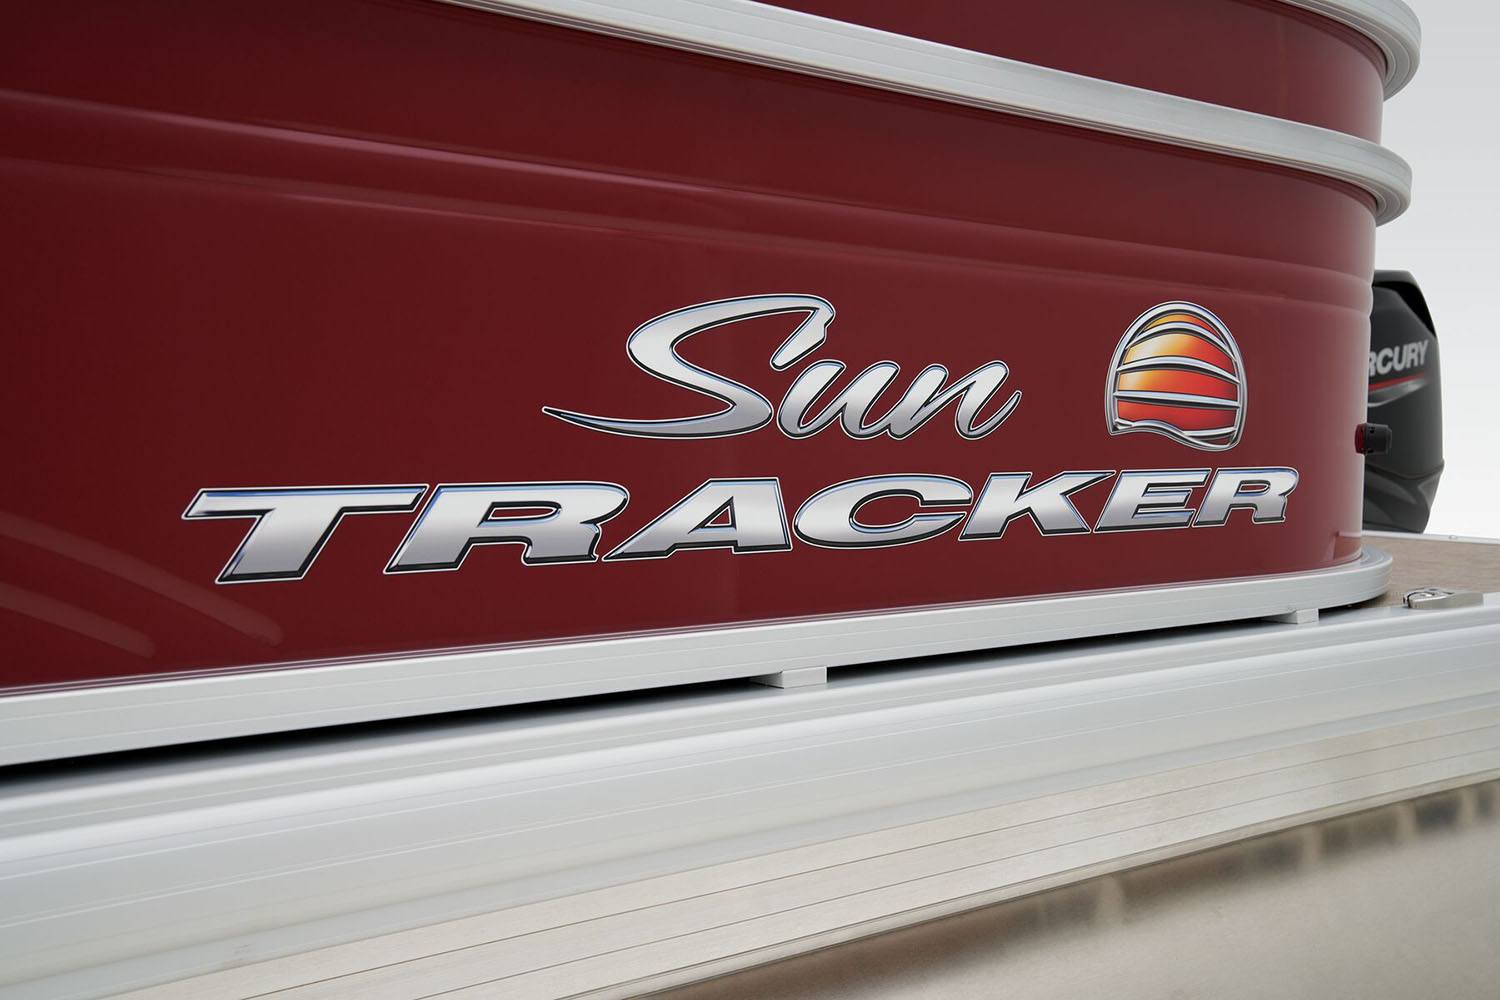 2024 Sun Tracker Party Barge 20 DLX in Topeka, Kansas - Photo 14